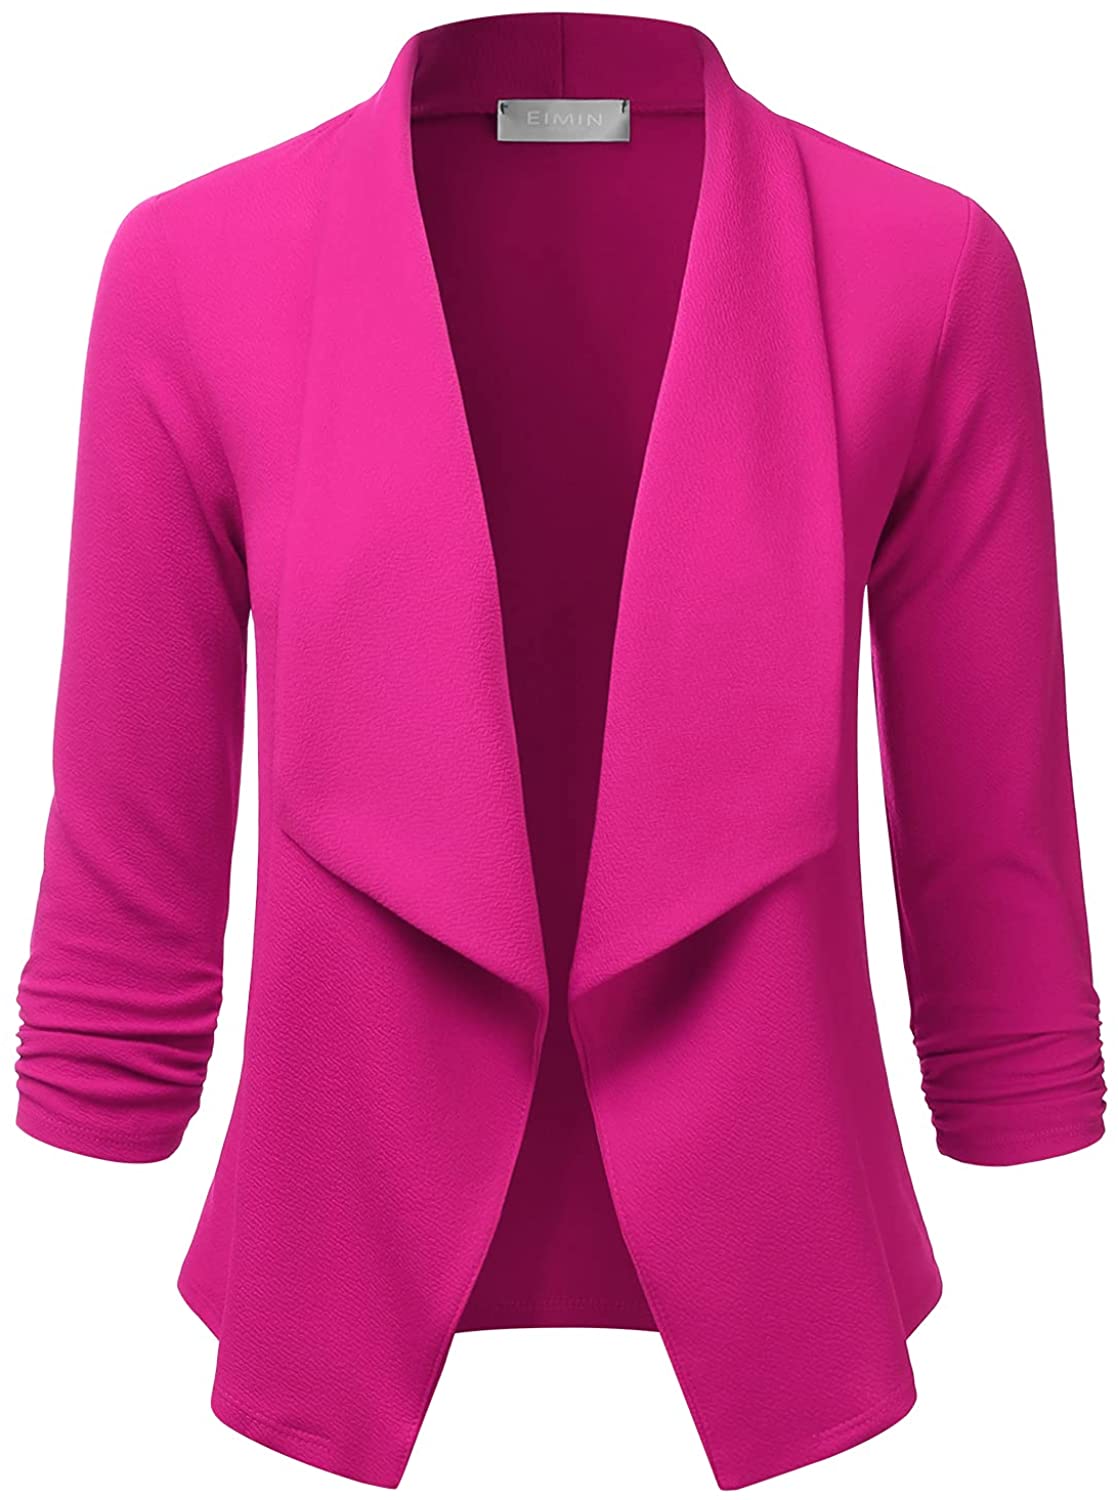 S-3XL EIMIN Women's 3/4 Sleeve Blazer Open Front Office Work Cardigan Jacket 